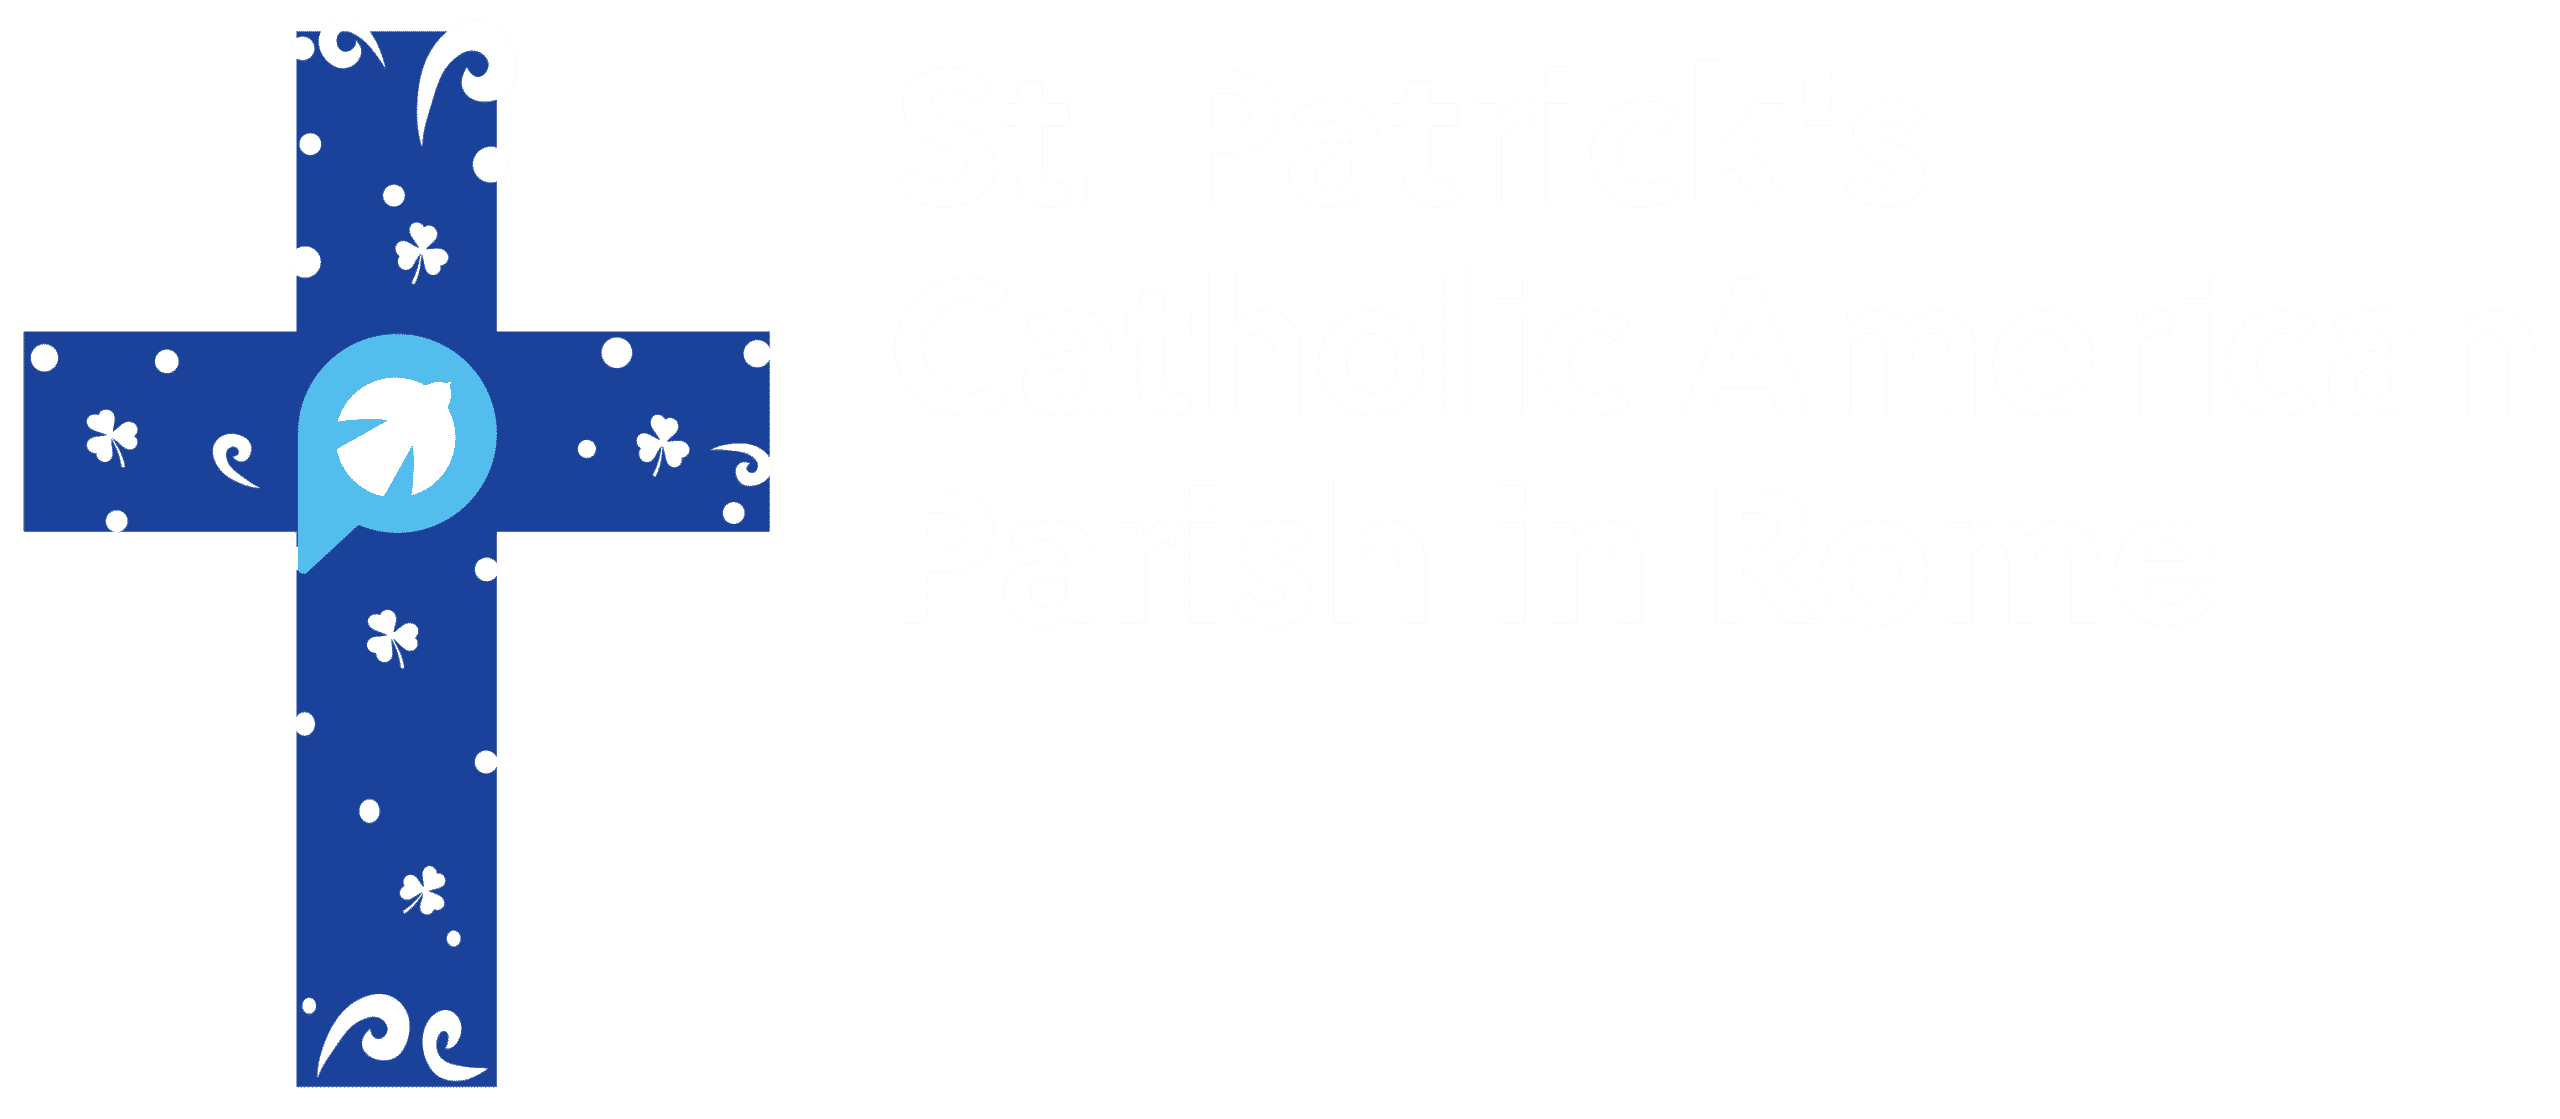 St. Patrick's Catholic American Parish in Rome